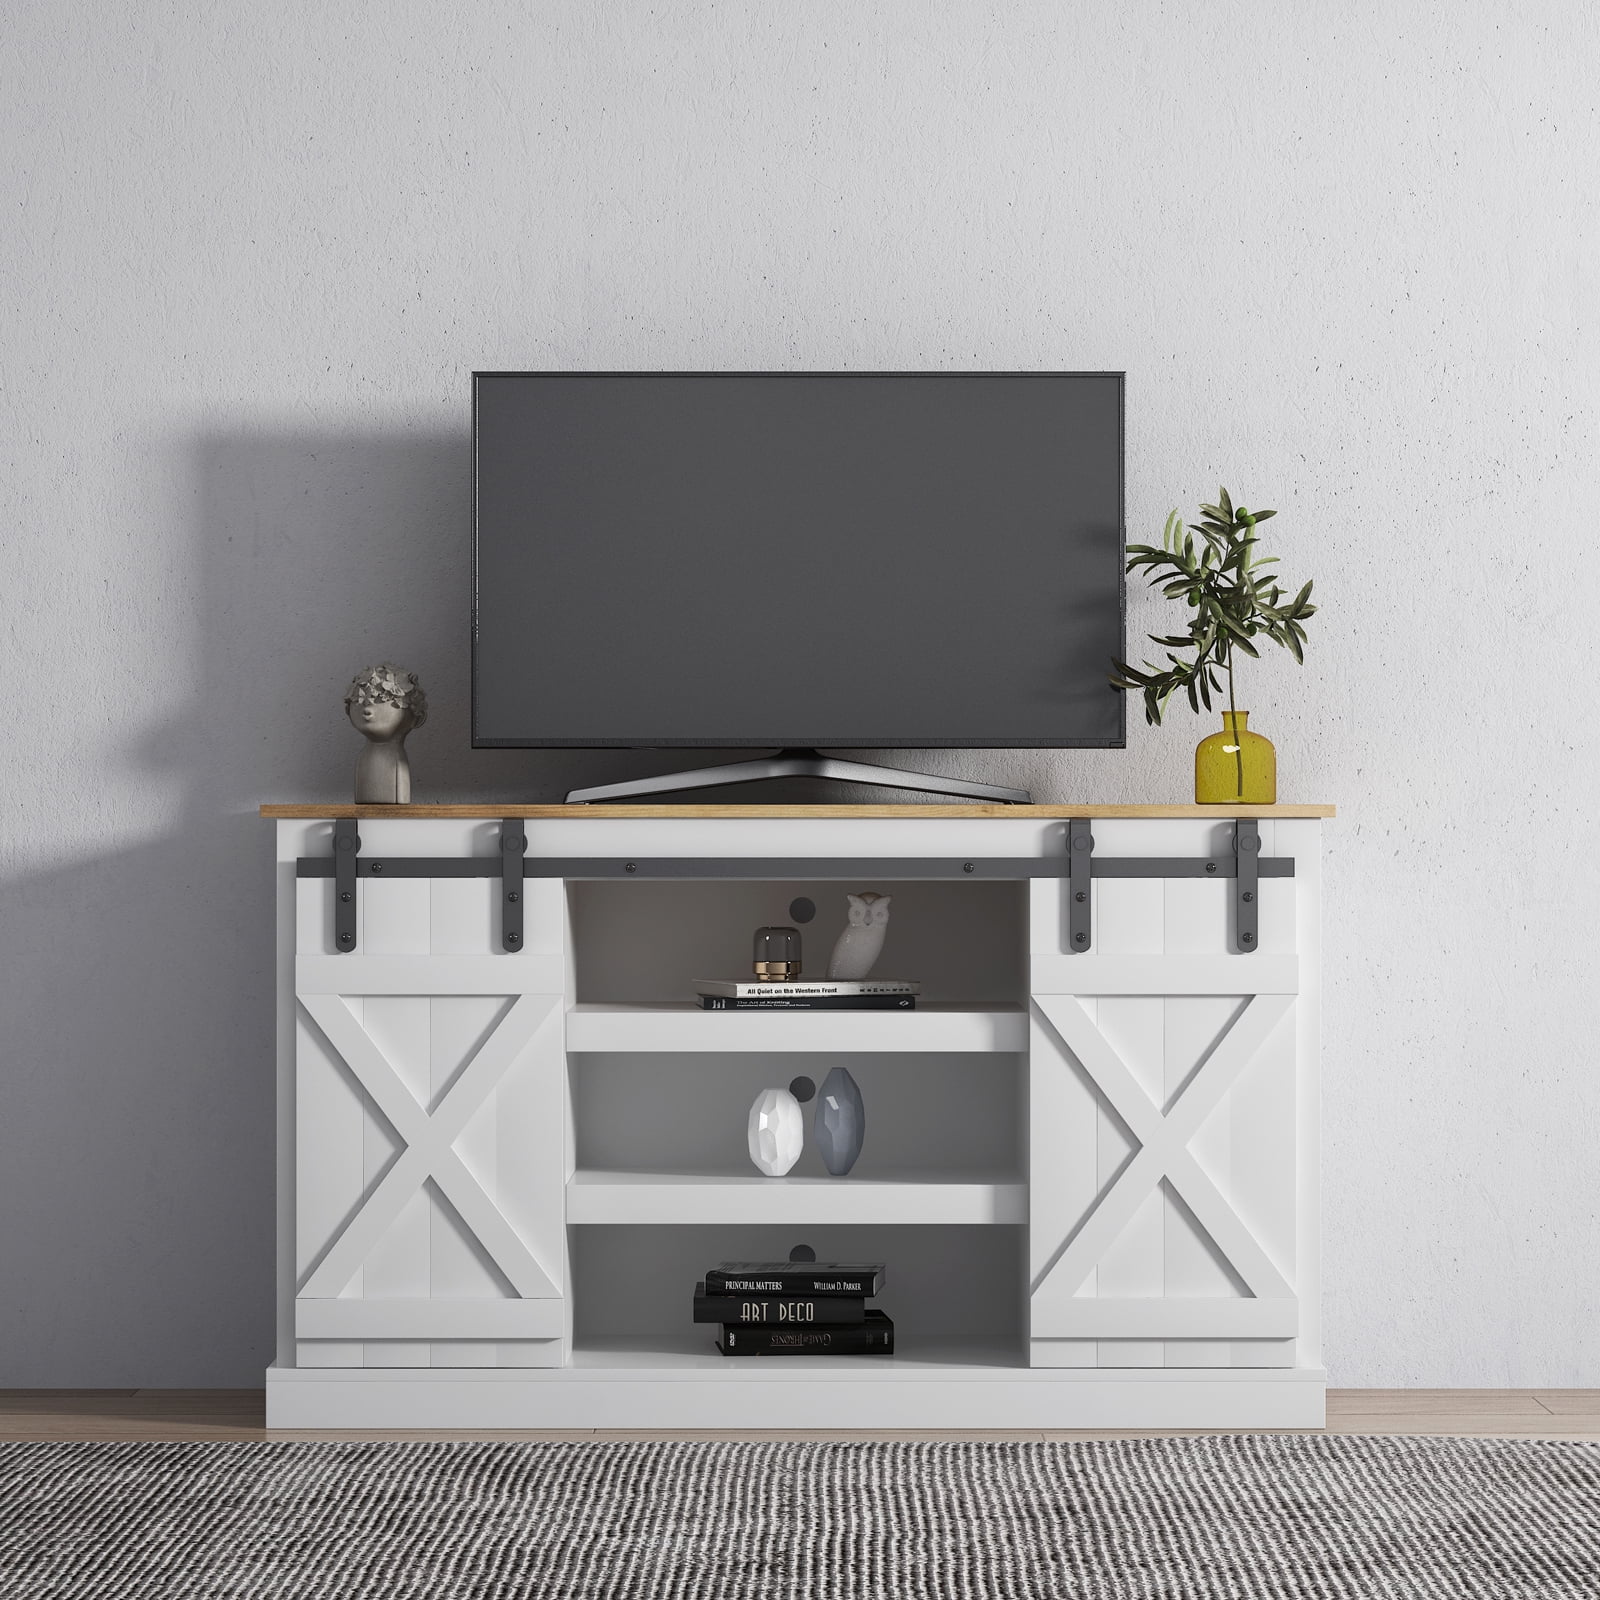 HOMCOM TV Stand with Shelf & Drawers Storage Cabinet Media Entertainment Center Modern White 